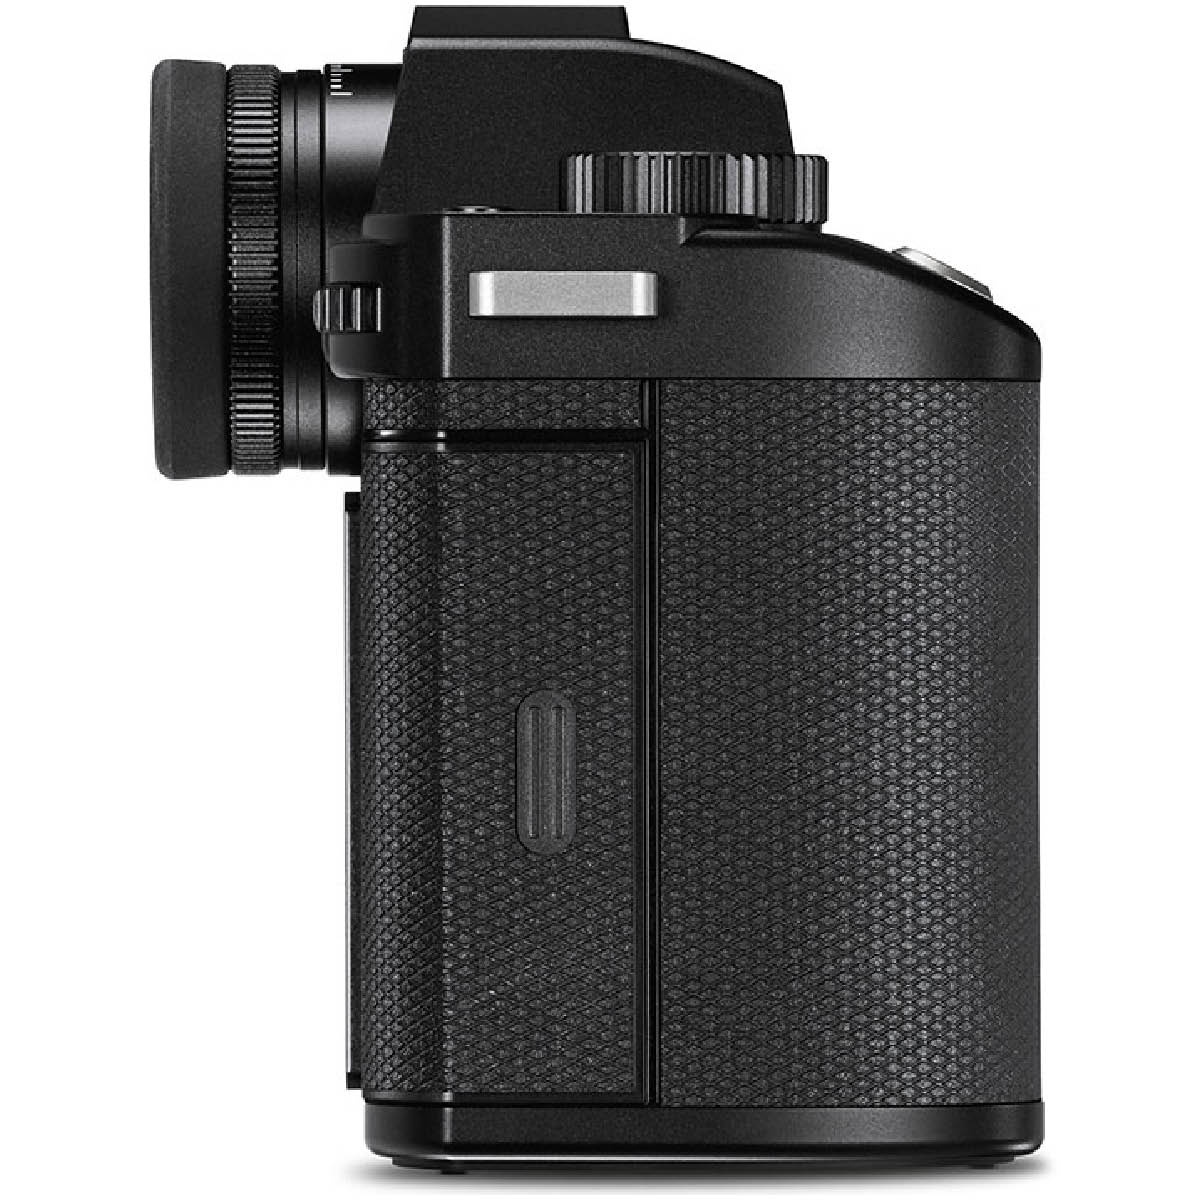 Leica SL 2 Gehäuse